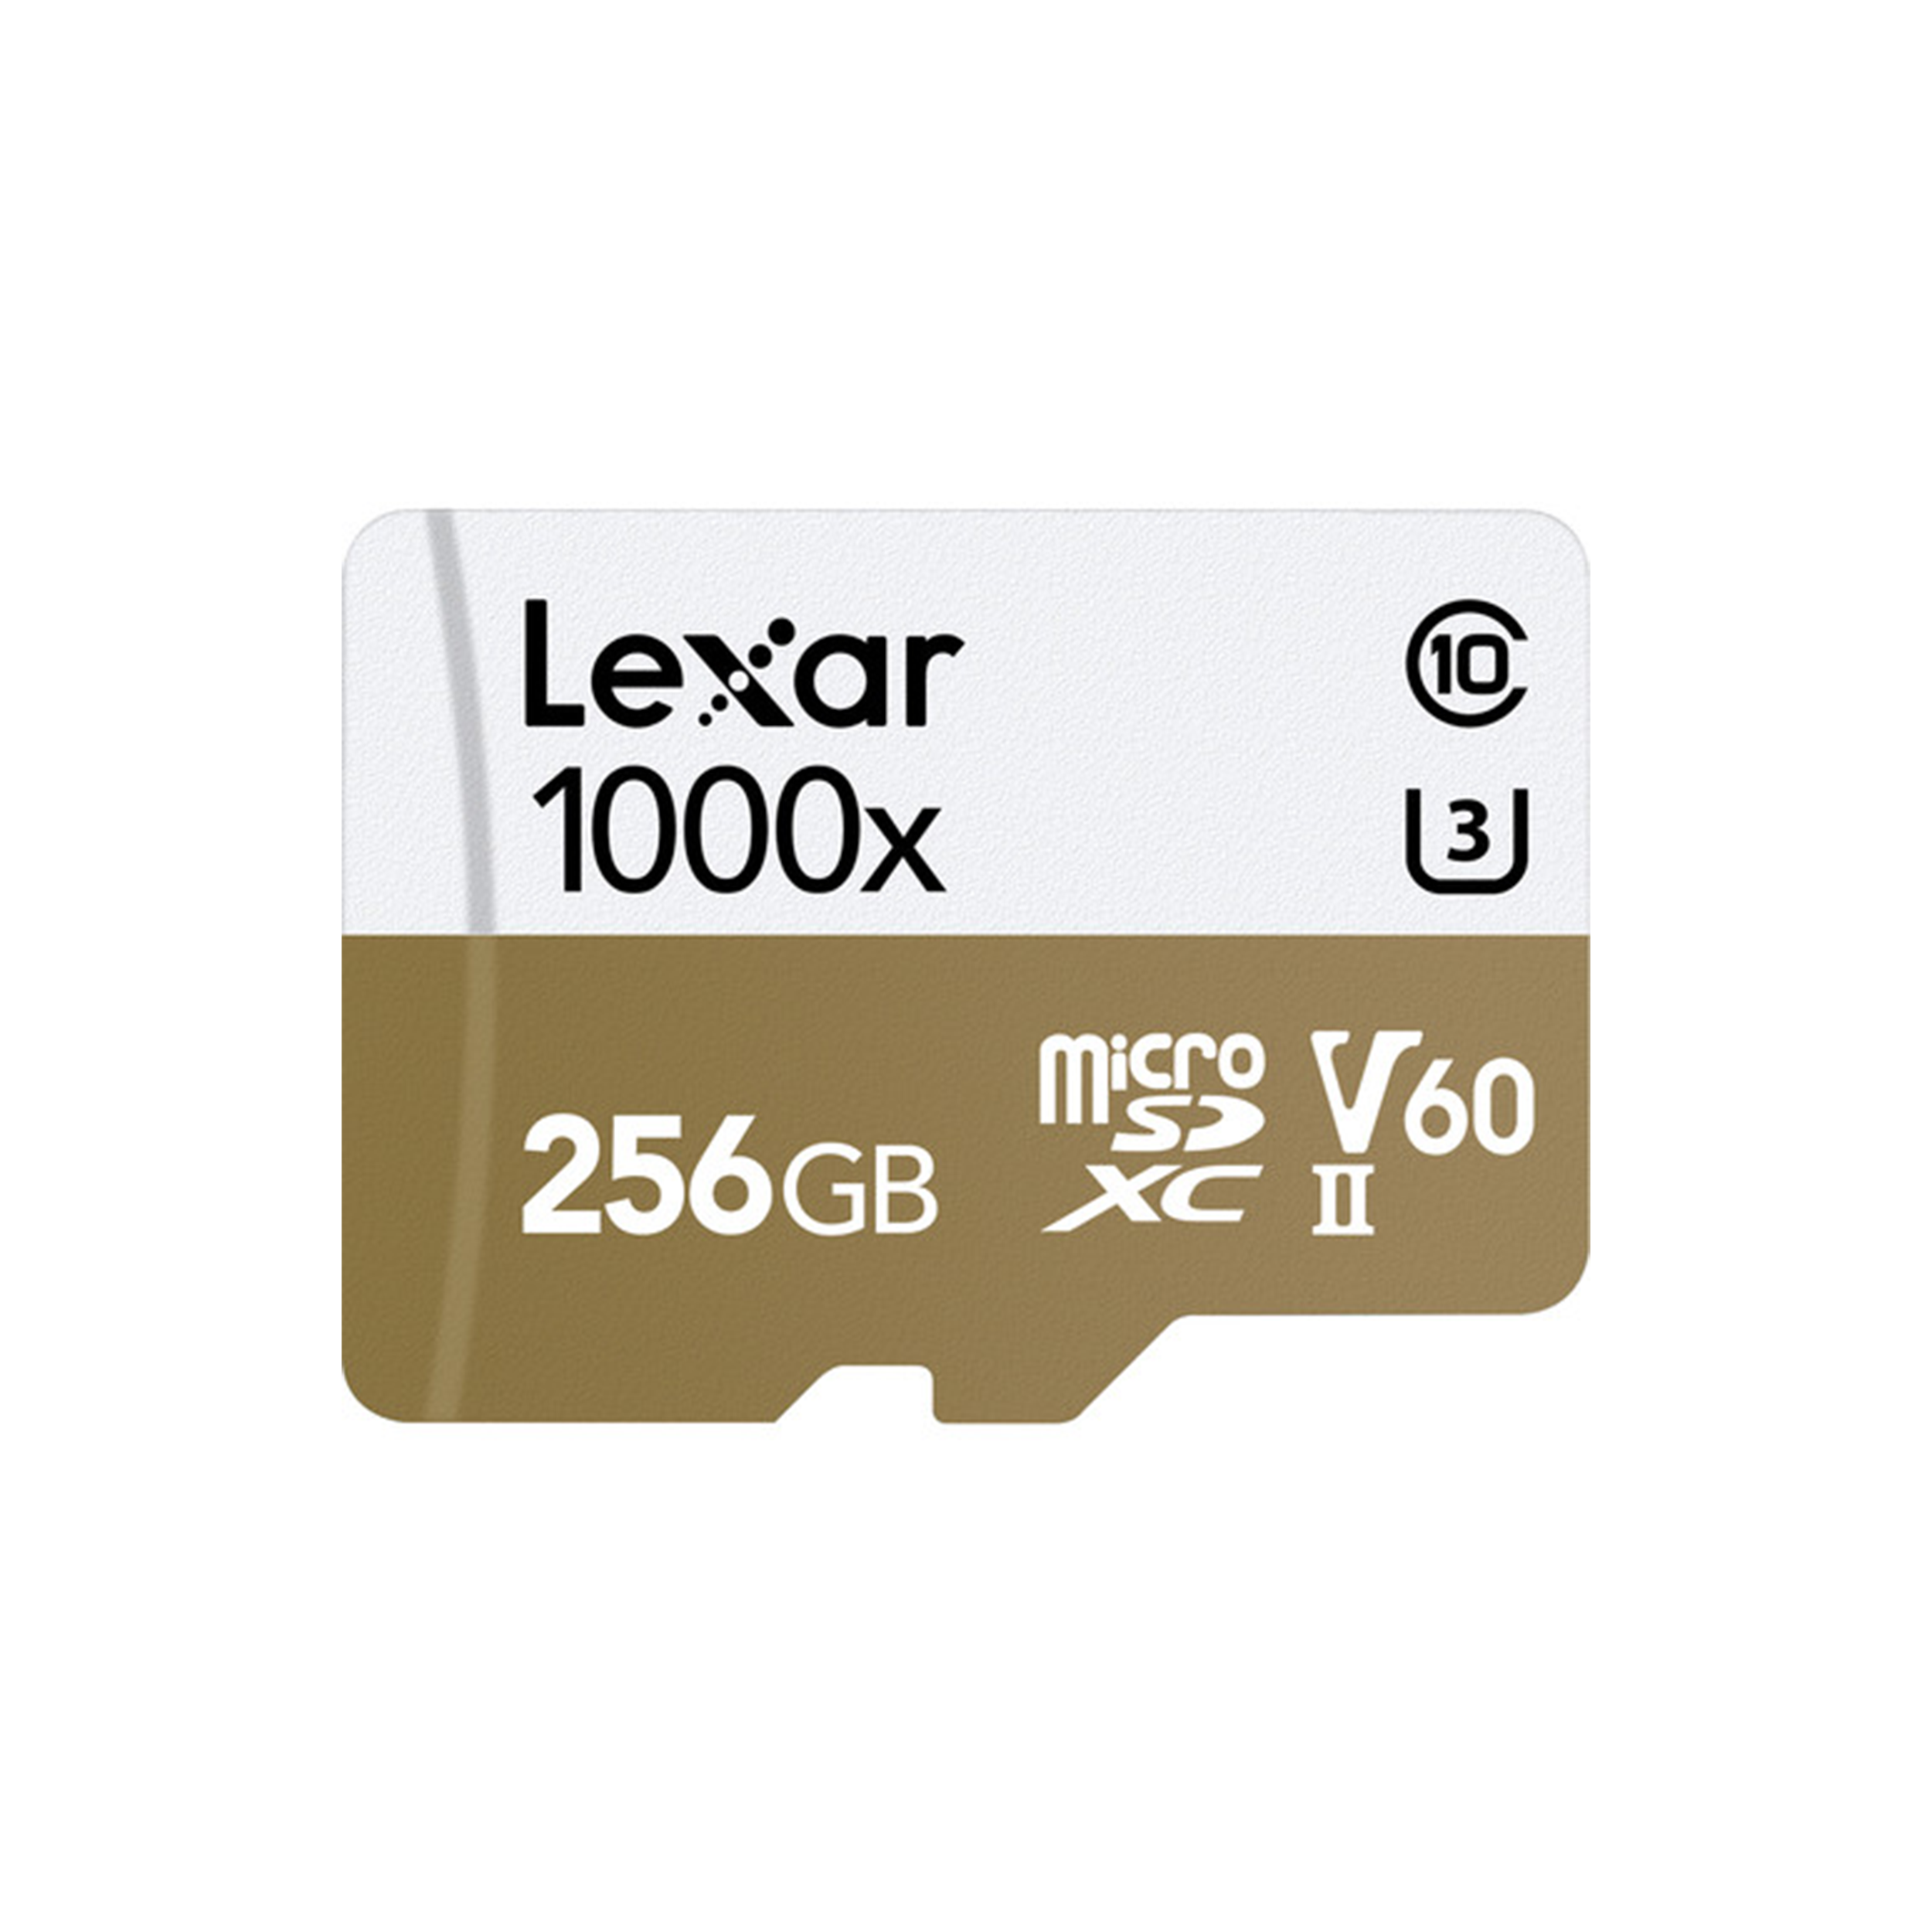 Lexar 256GB Professional 1000x UHS-II microSDXC Memory Card with SD Adapter